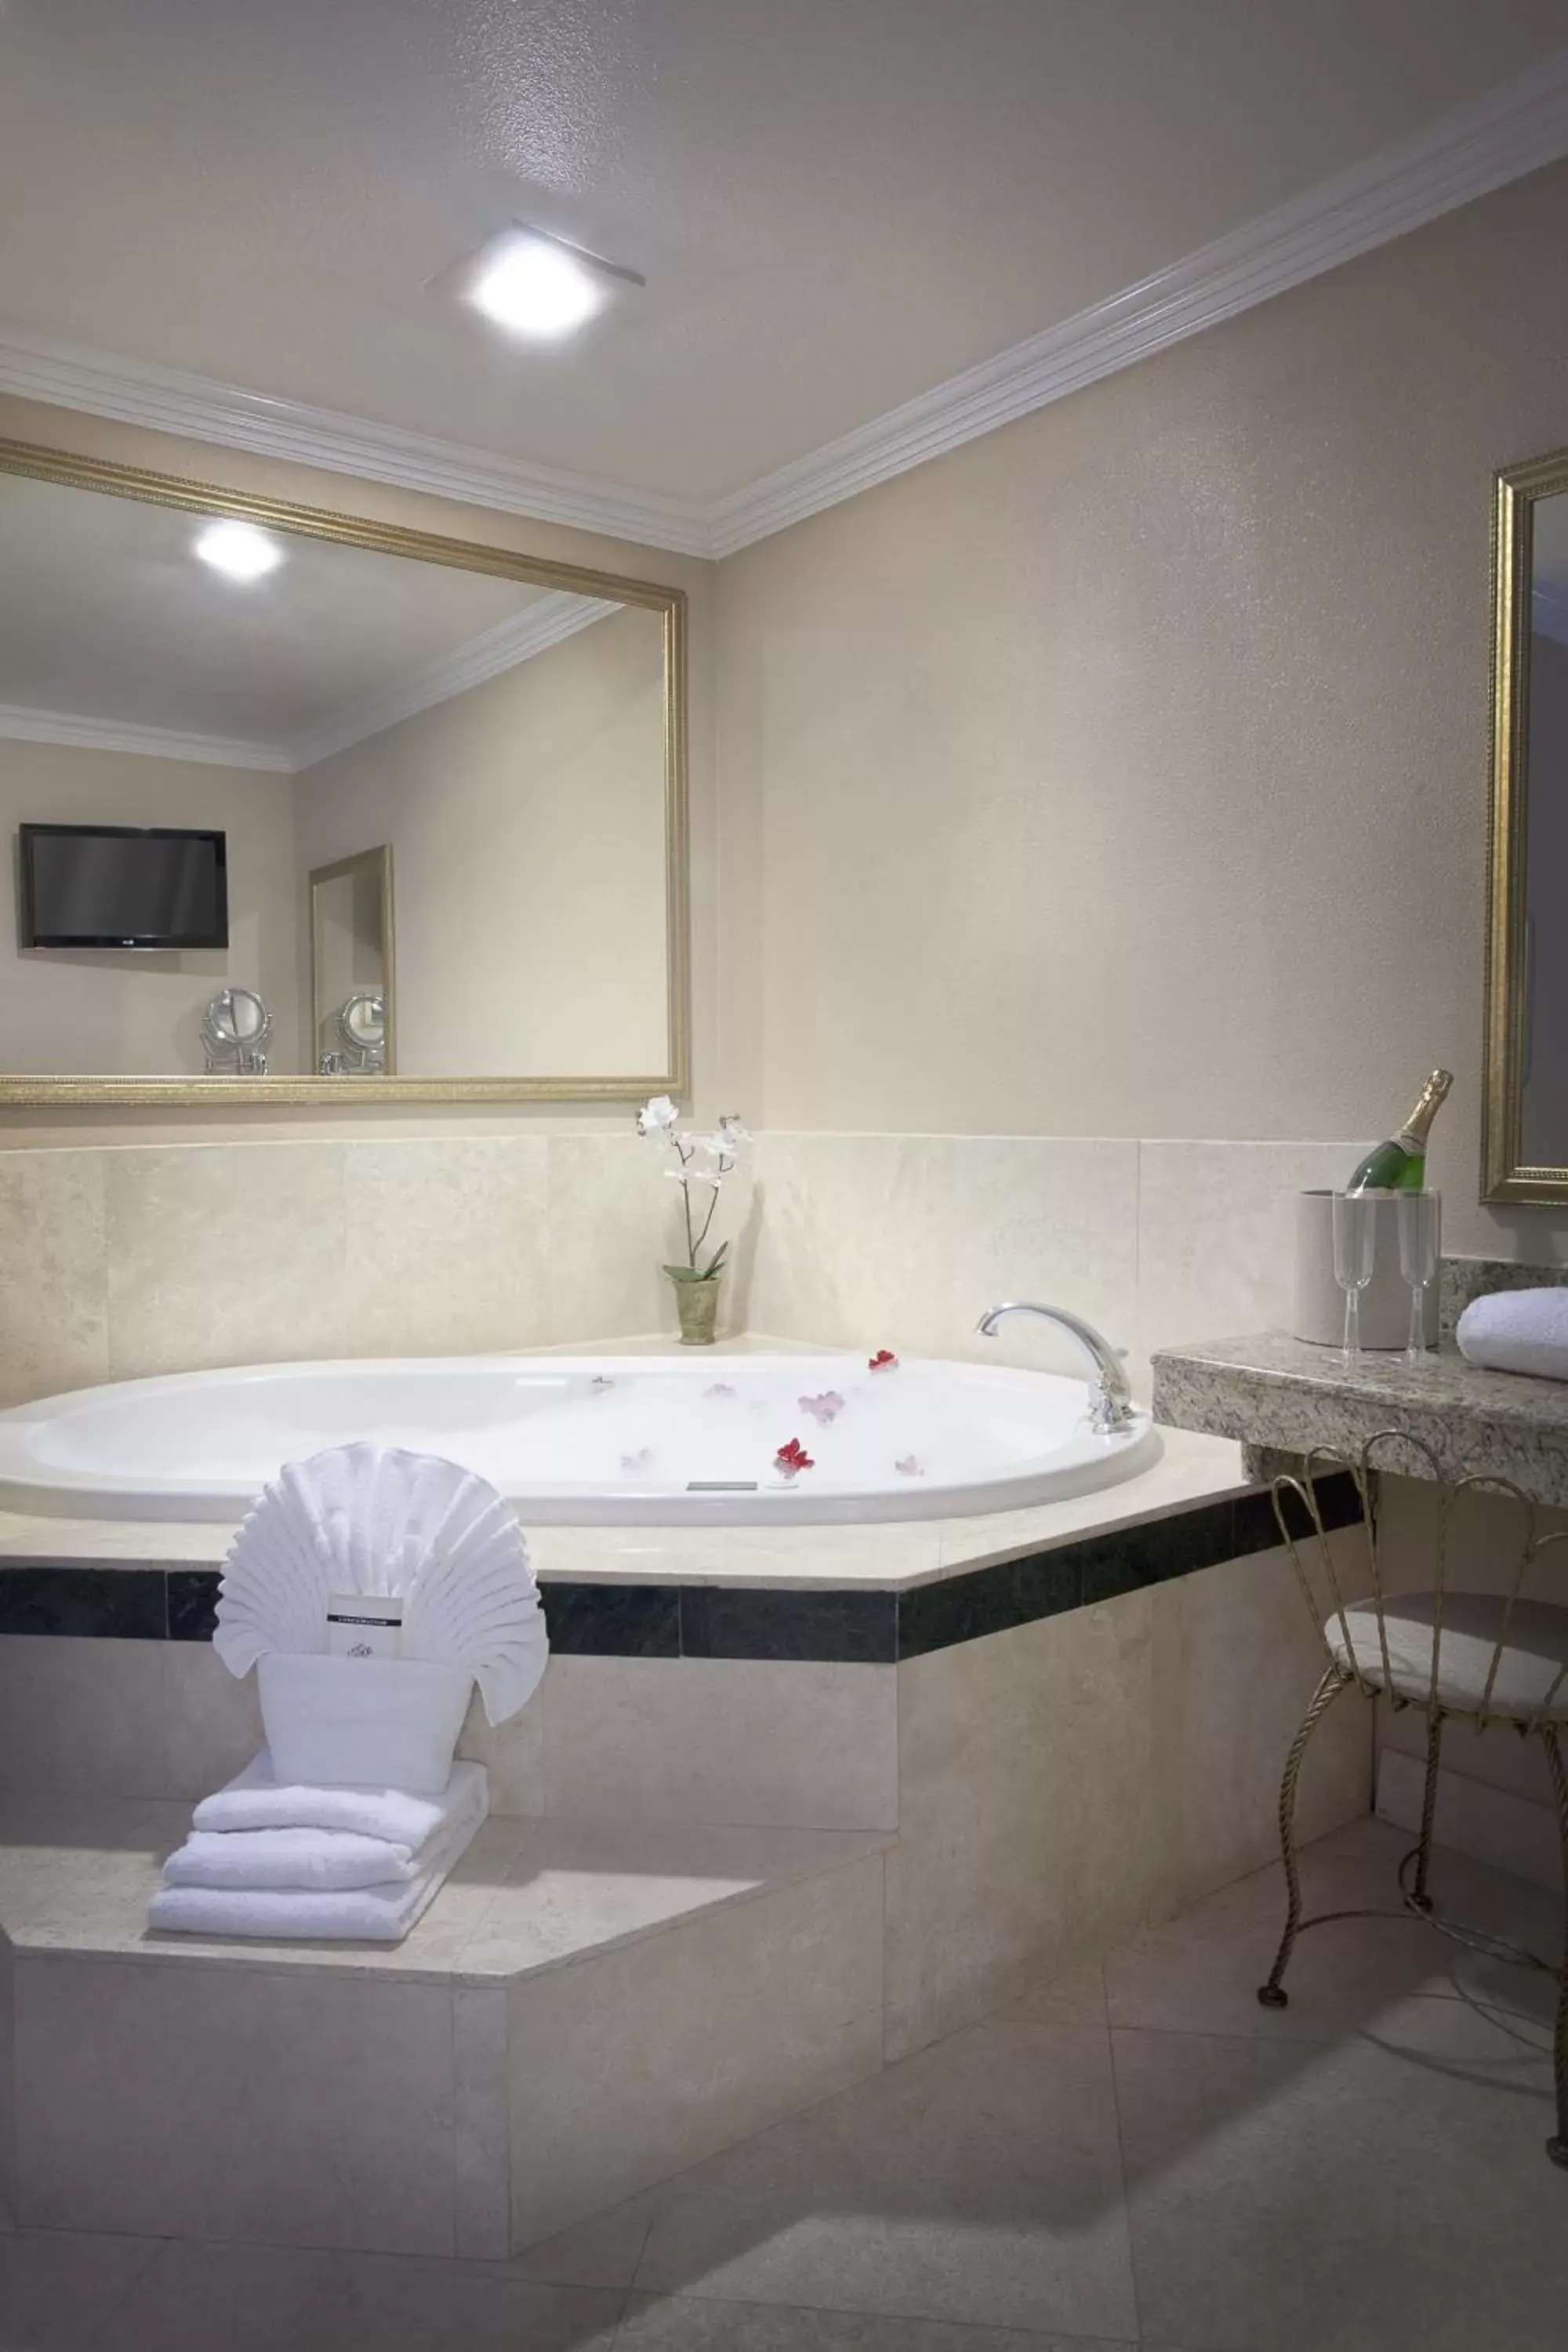 Area and facilities, Bathroom in Best Western Plus Marina Shores Hotel